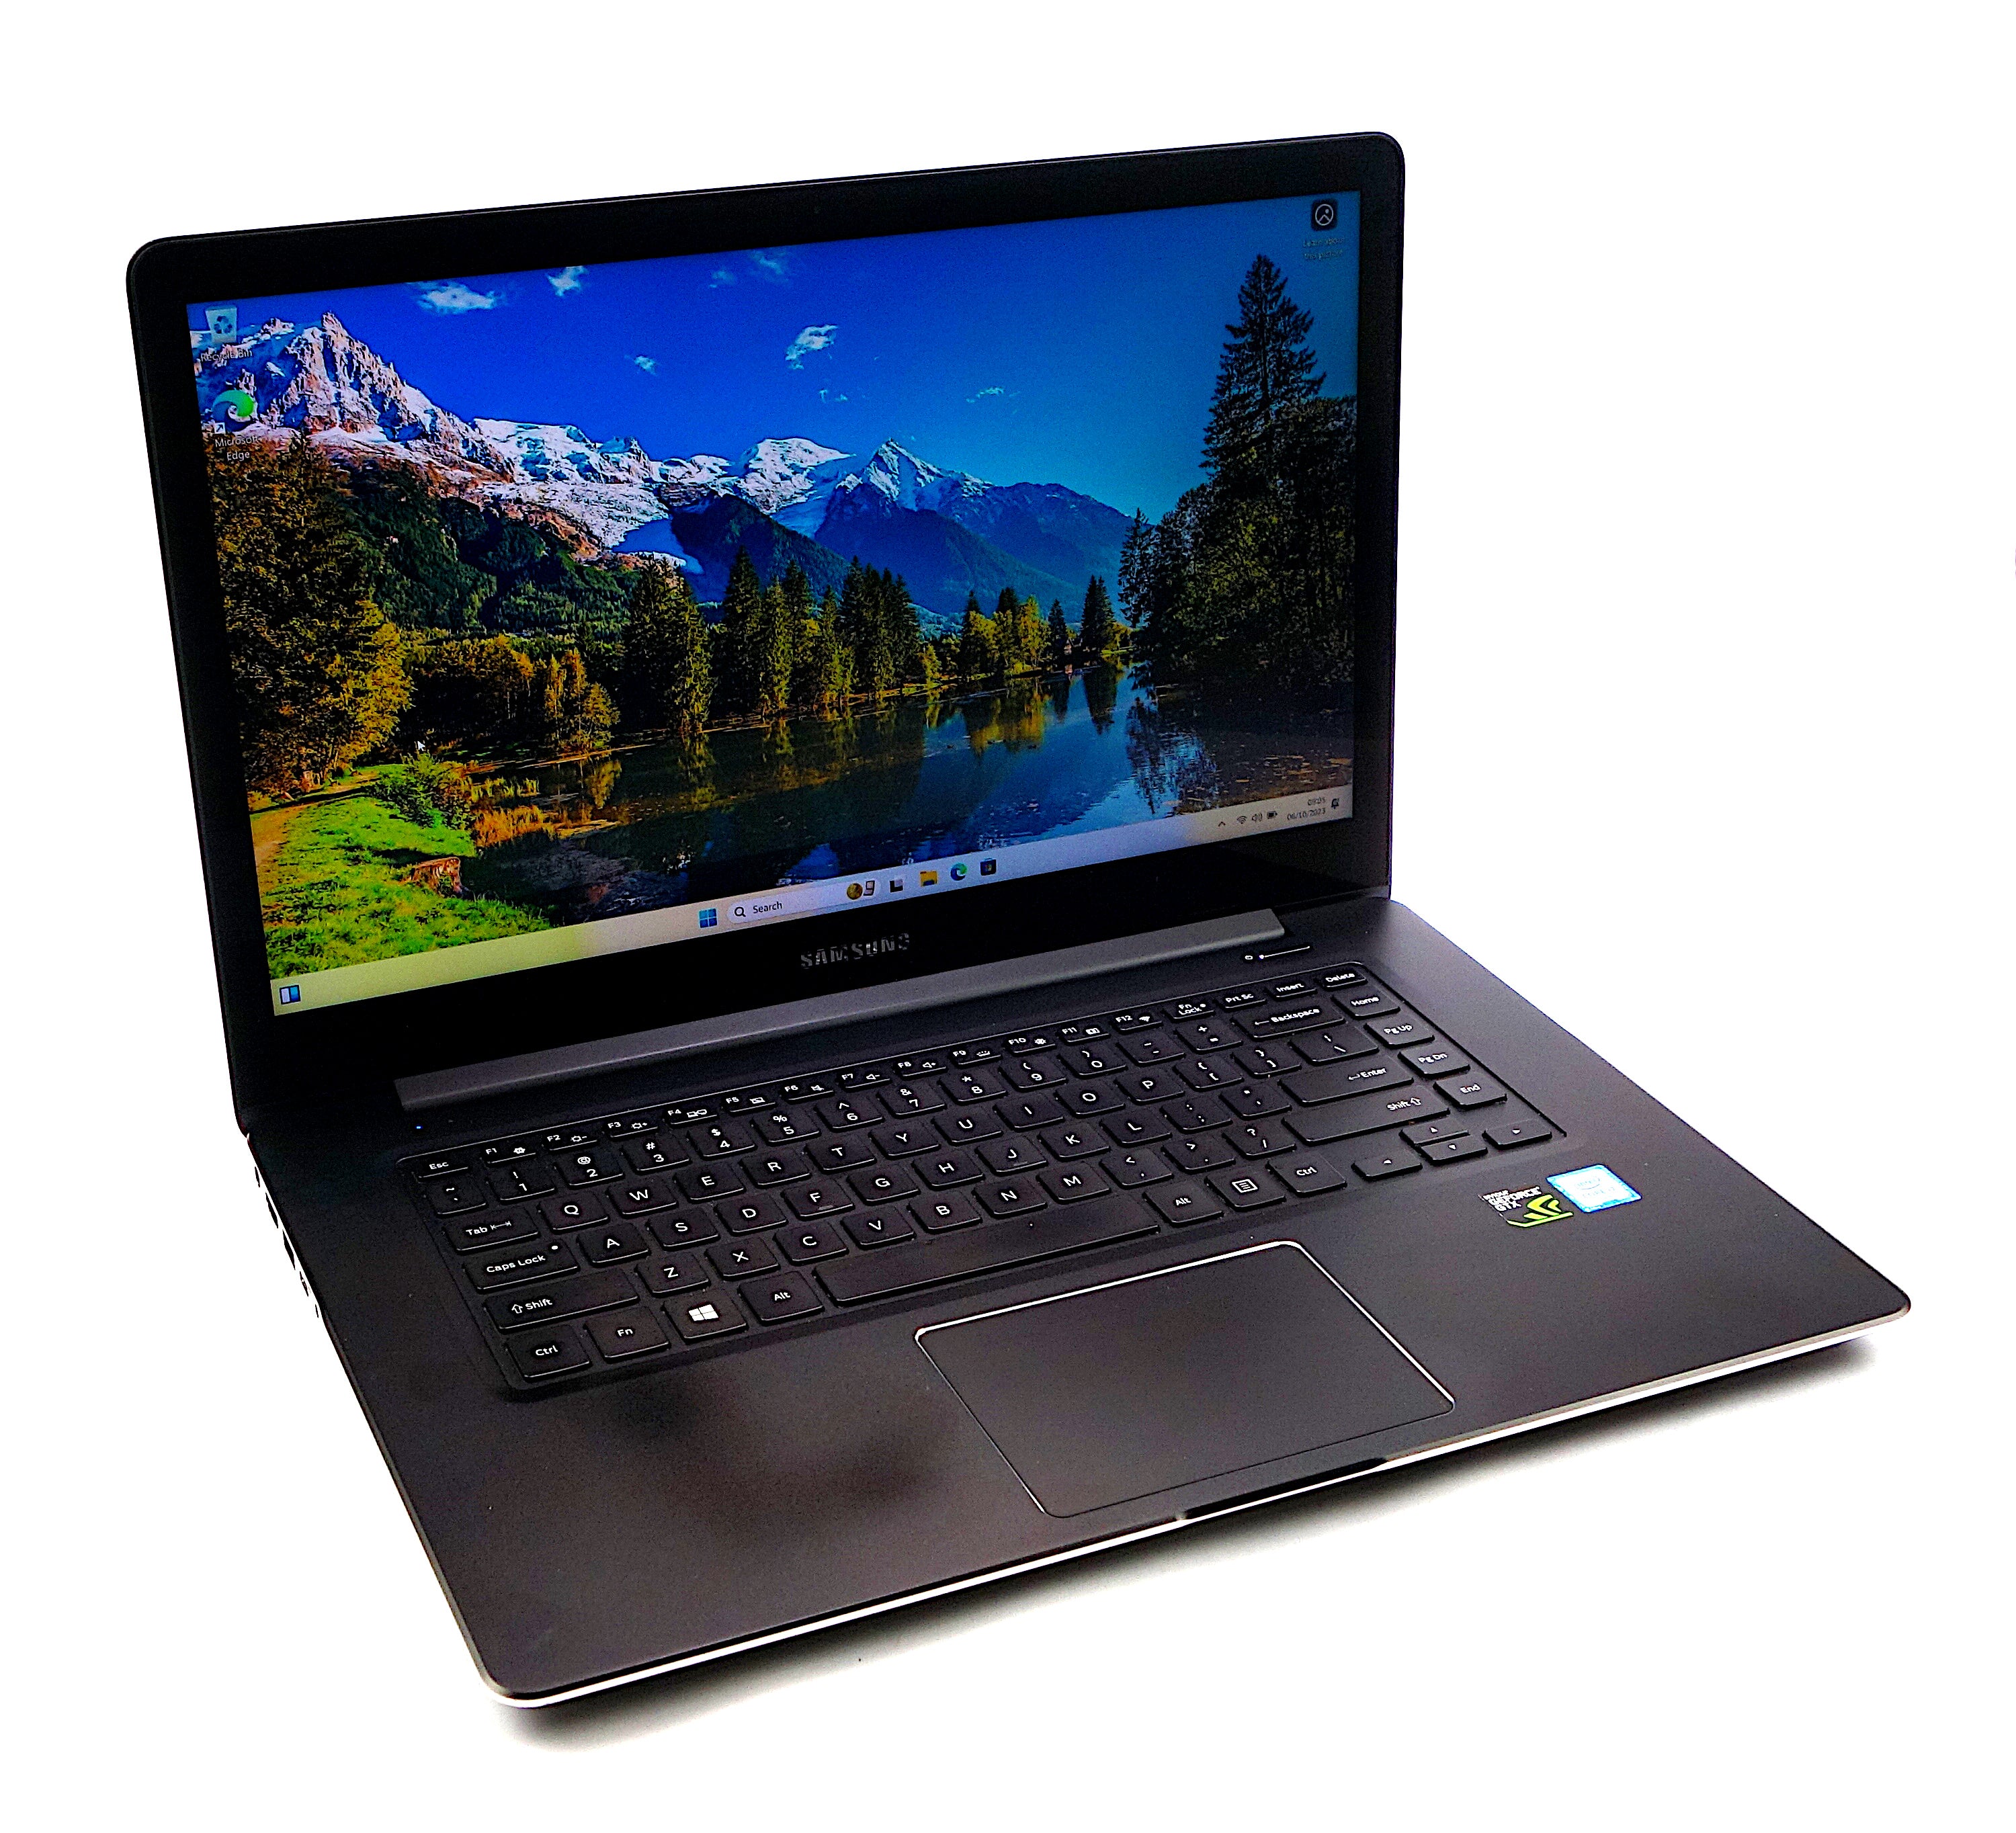 Samsung Notebook 9 Pro Laptop 15.6" Core i7 6th Gen 8GB RAM 256GB SSD